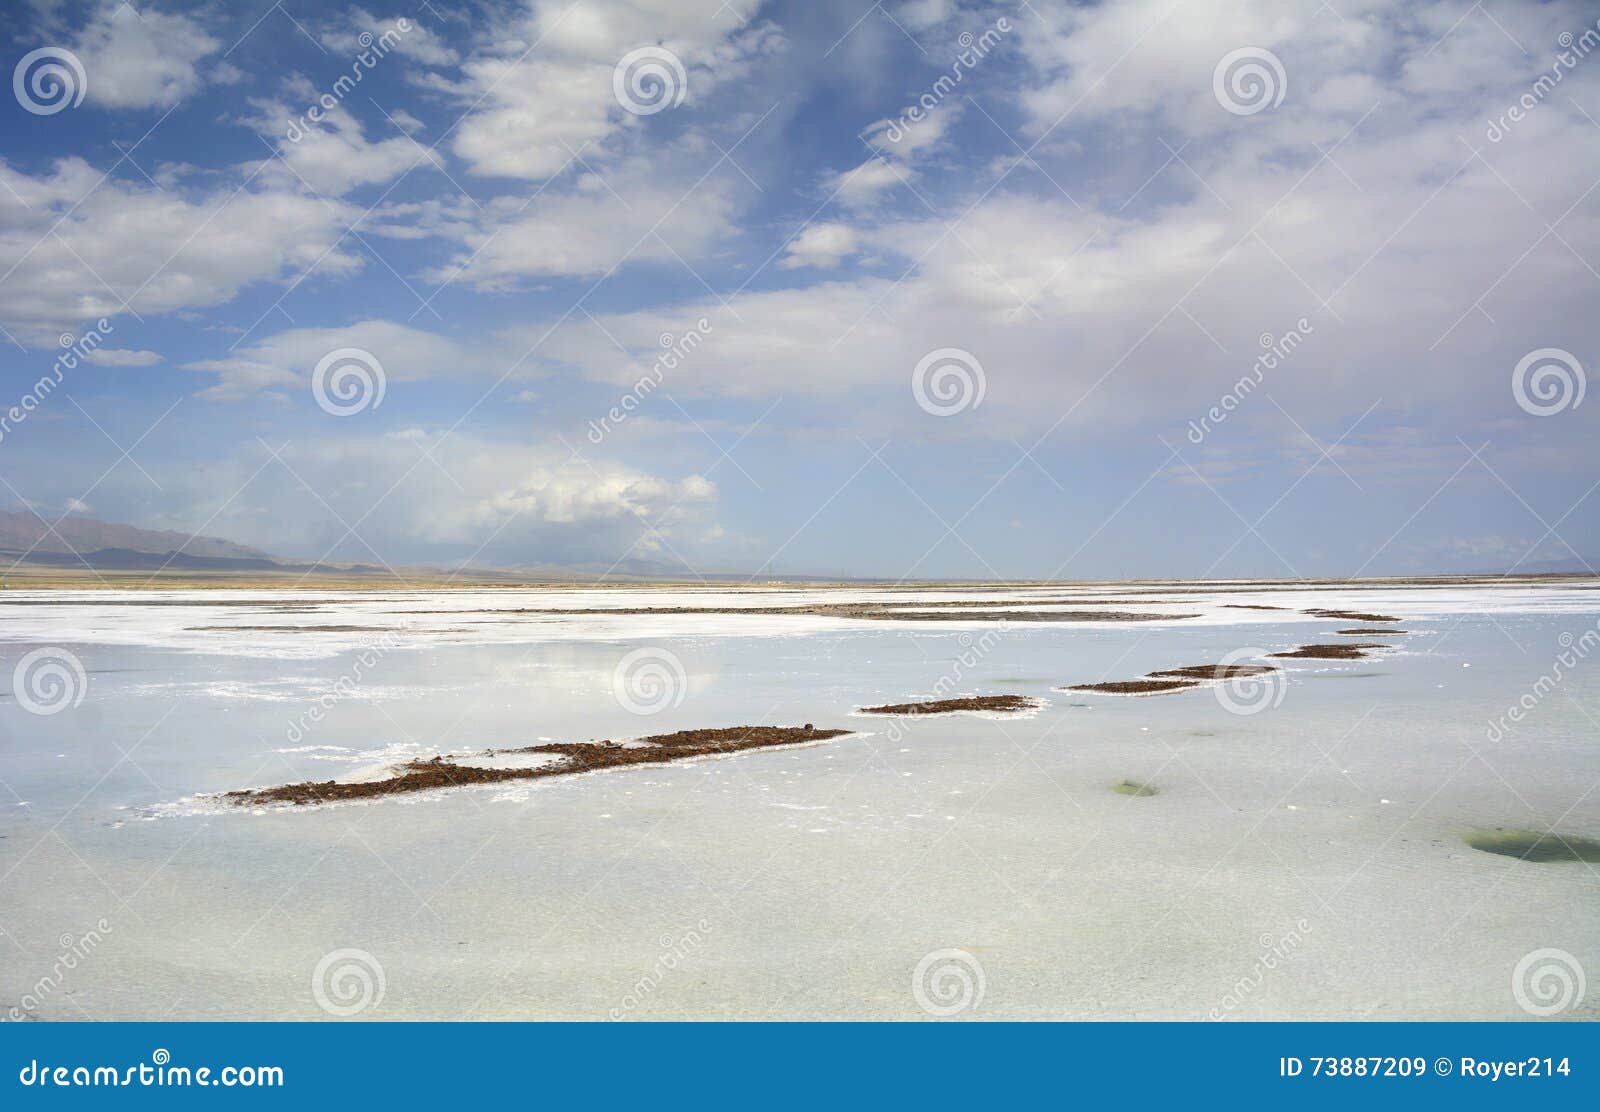 view of chaka salt lake